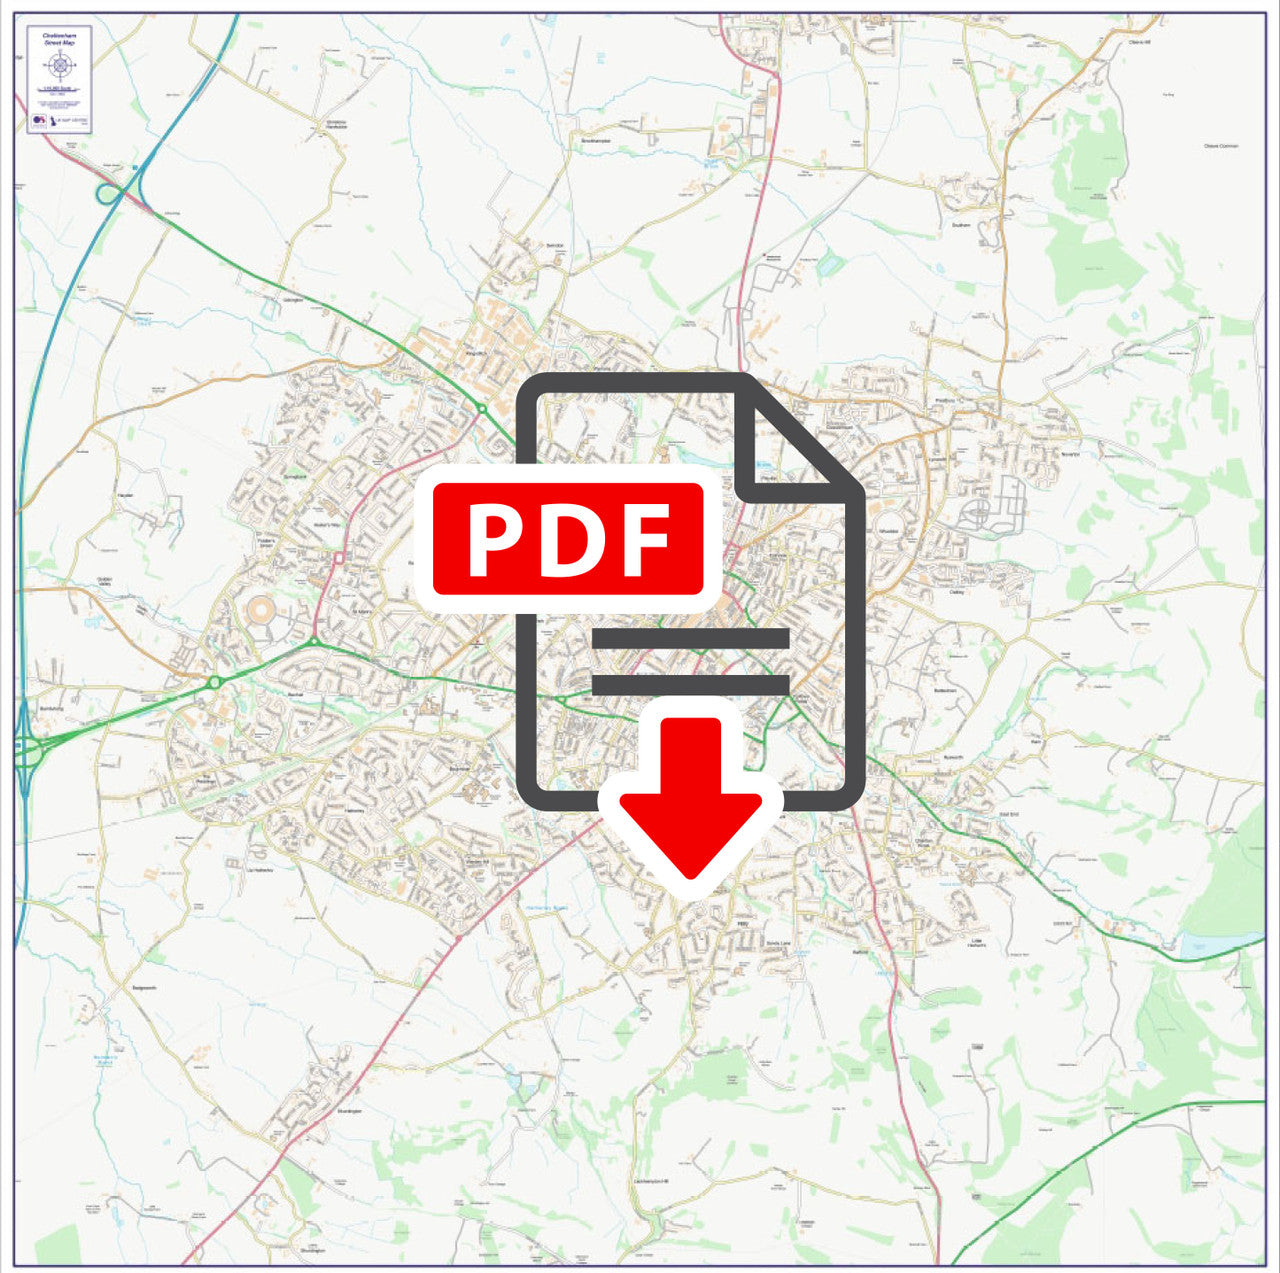 Central Cheltenham City Street Map - Digital Download